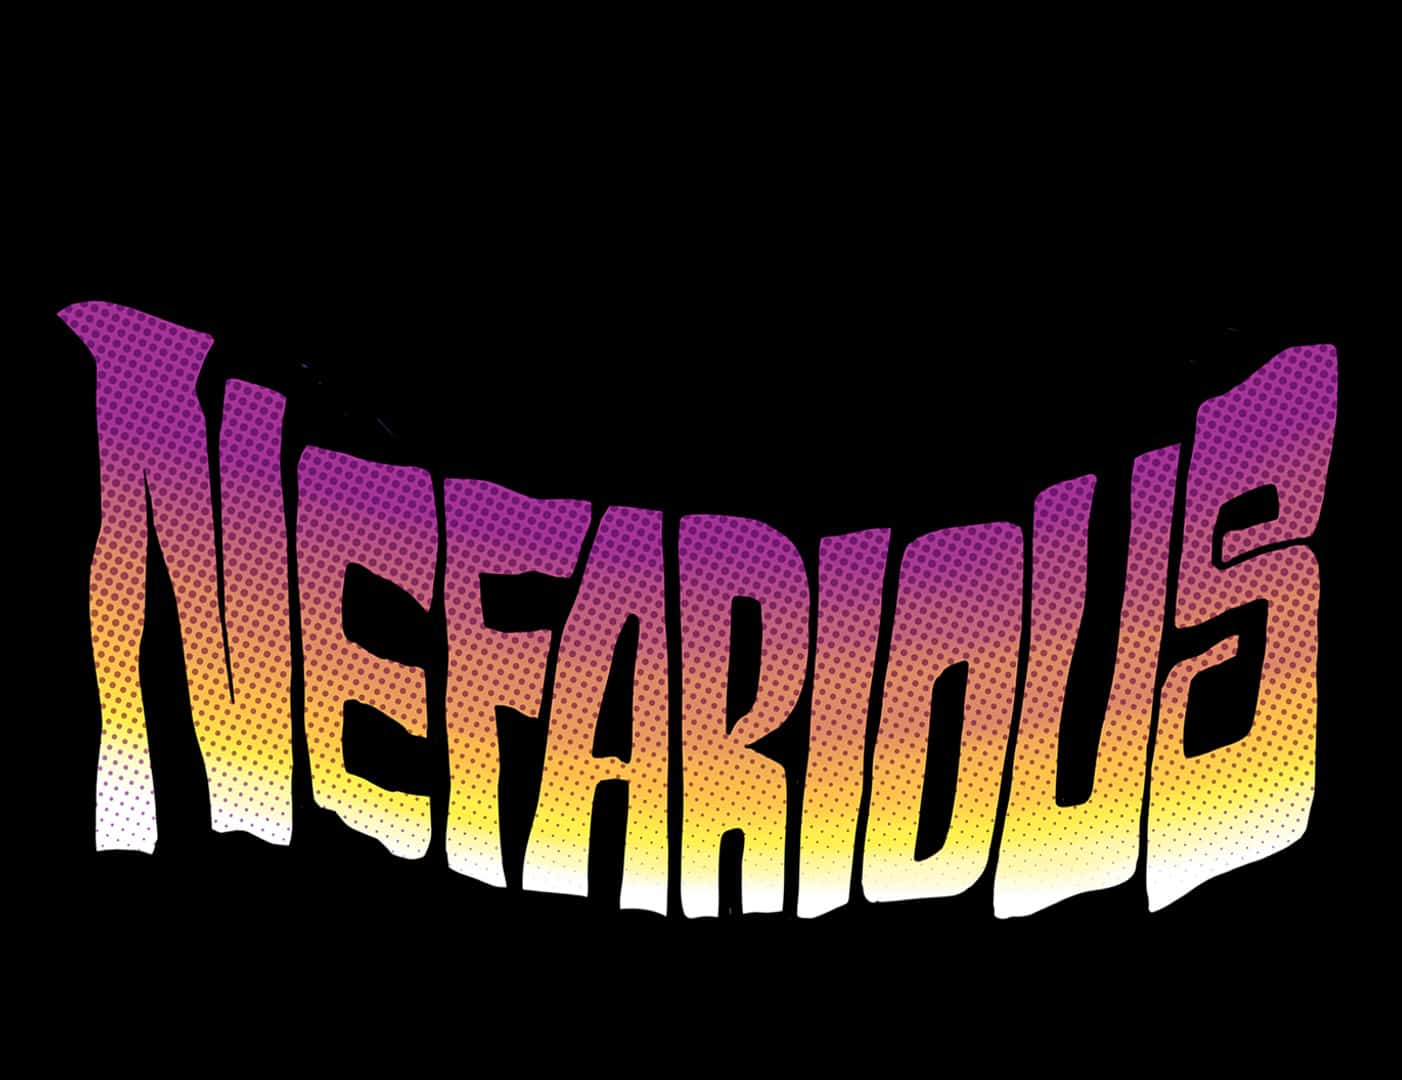 Nefarious